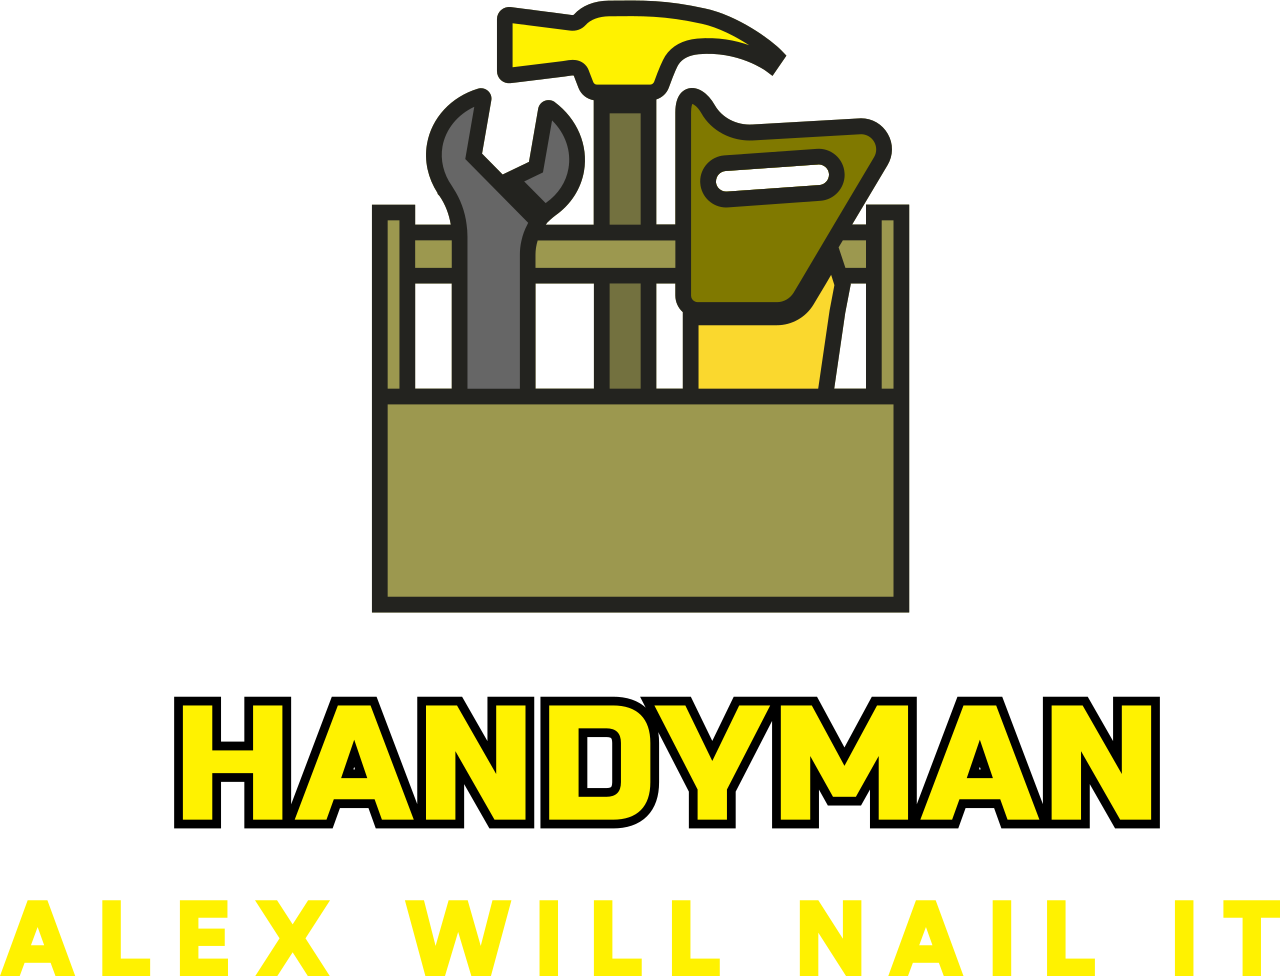  Handyman's logo